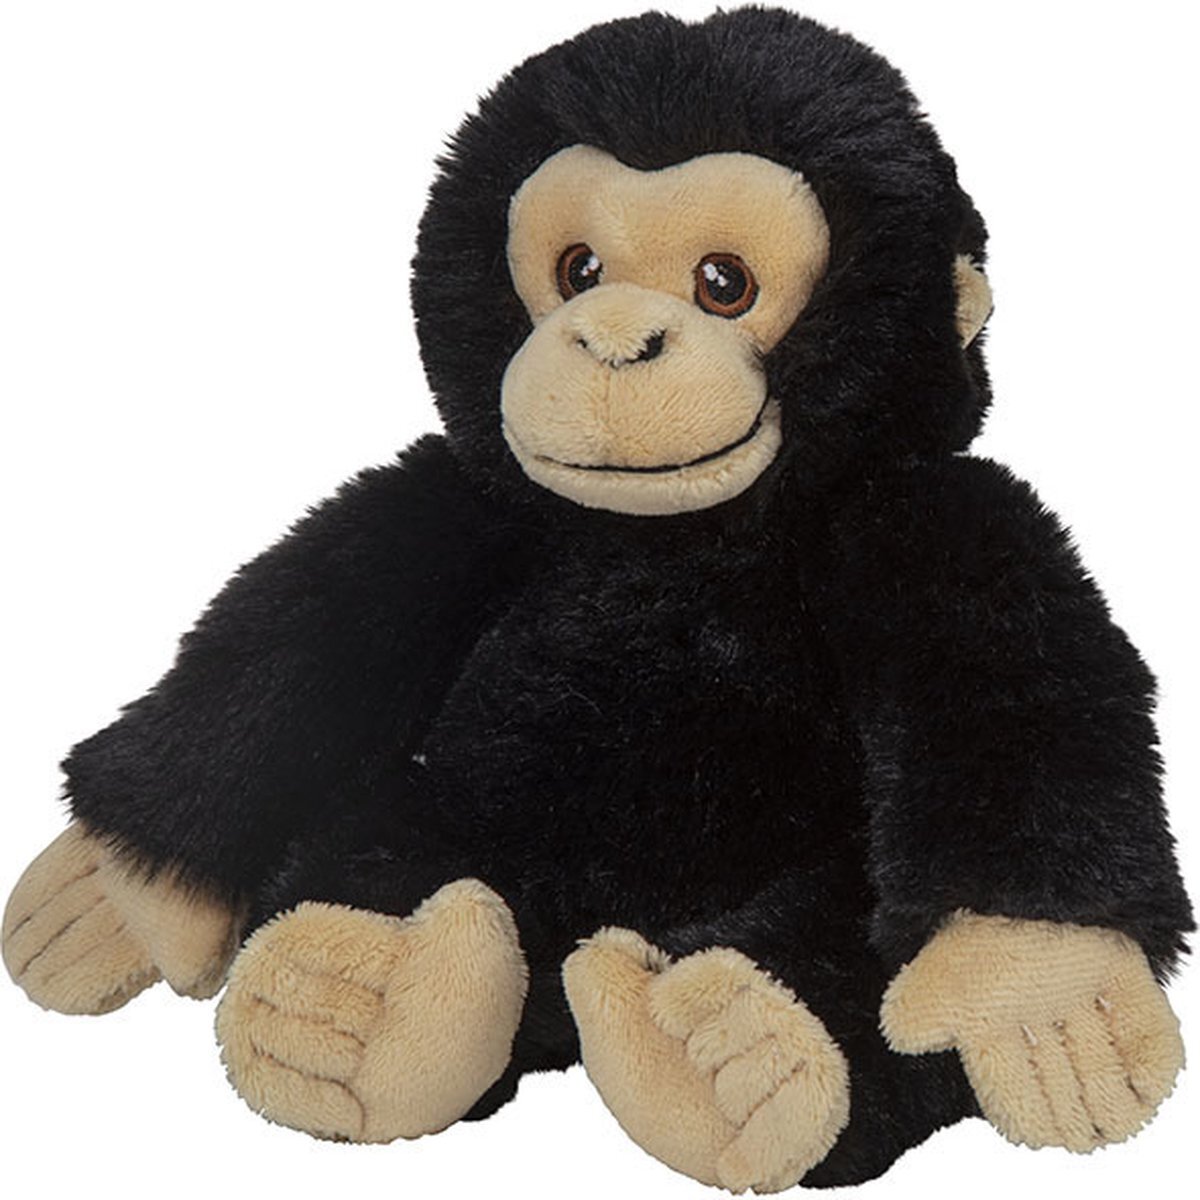 Nature Planet Pluche dieren knuffels Chimpansee aap van 16 cm - Knuffeldieren speelgoed